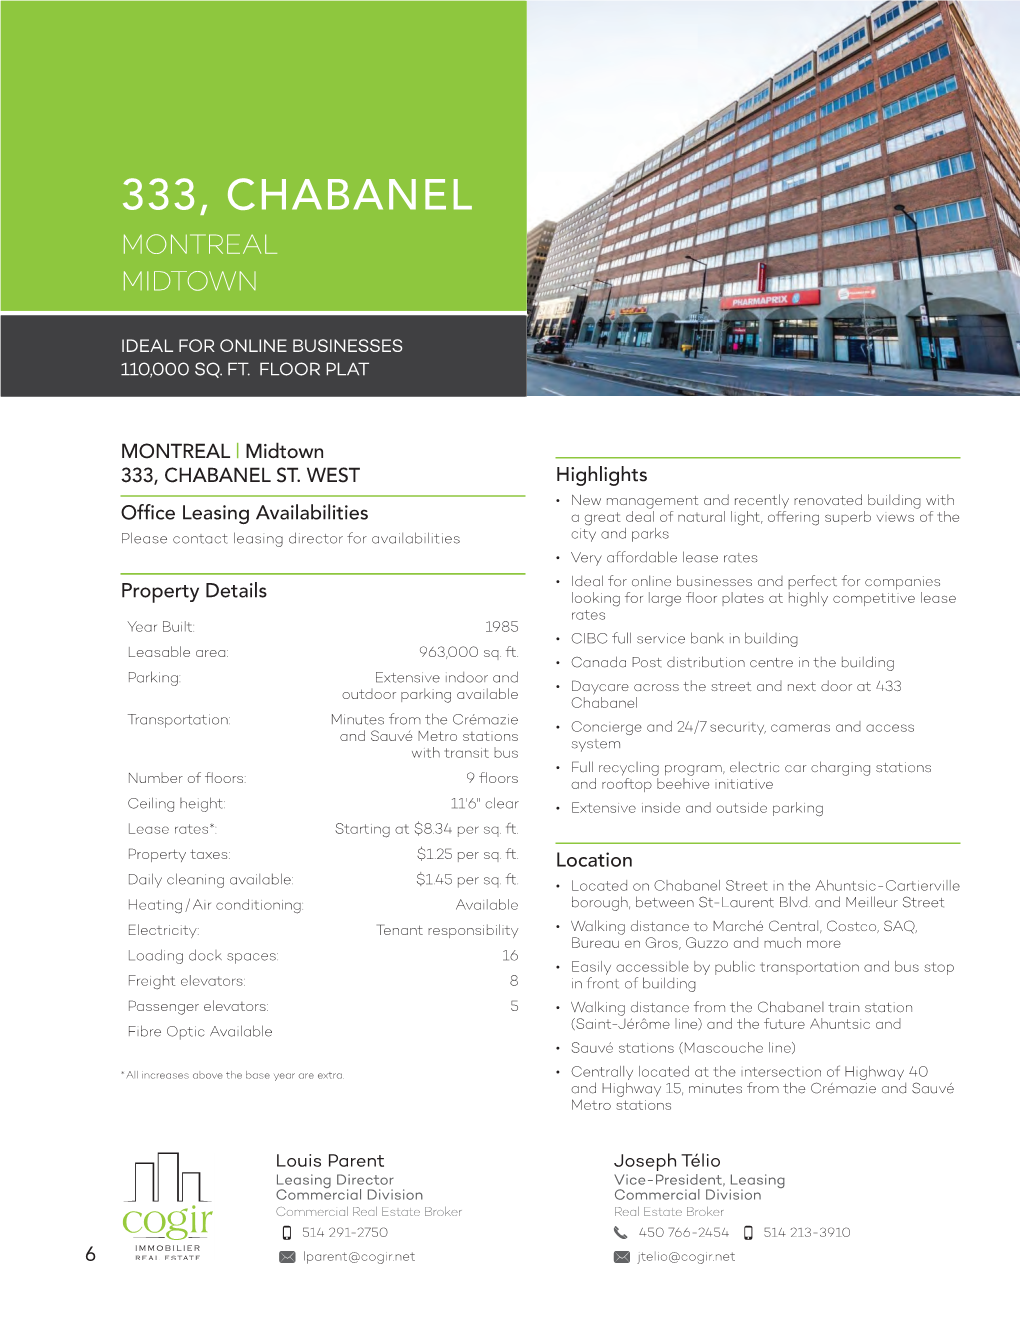 333, Chabanel Montreal Midtown